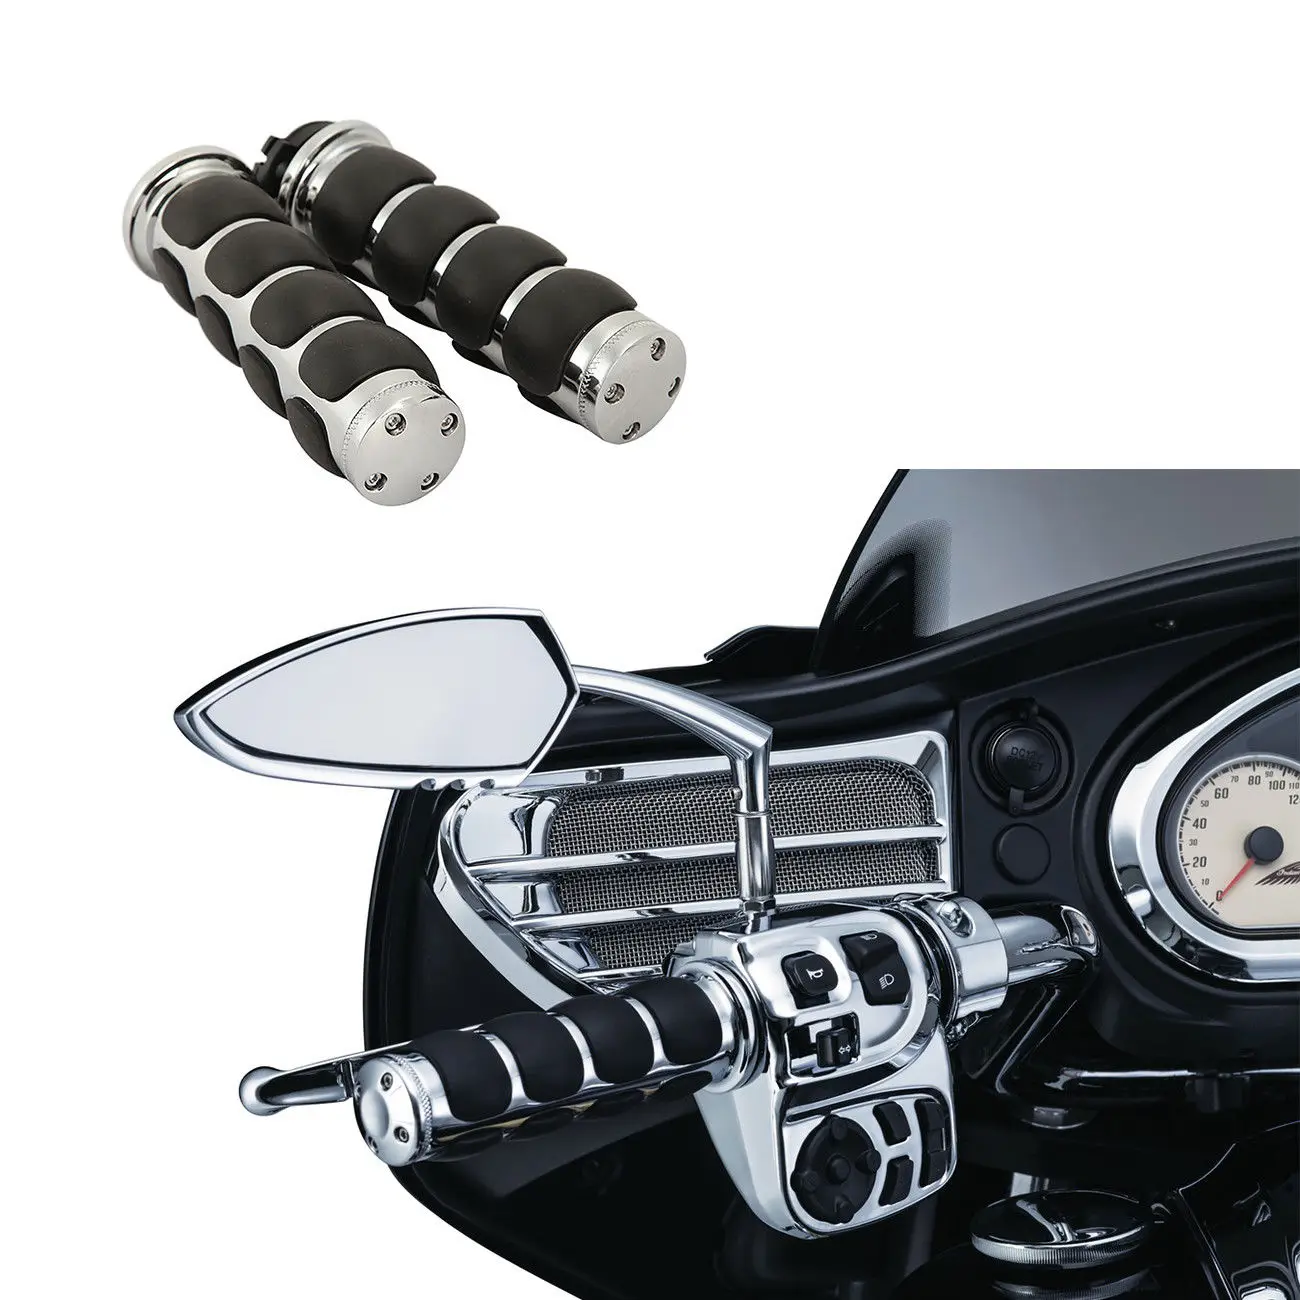 

Universal 25mm 1" Or 22mm 7/8" Motorcycle Handlebar Handle Bar End Hand Grips For Harley Davidson Honda Yamaha Cruiser Chopper